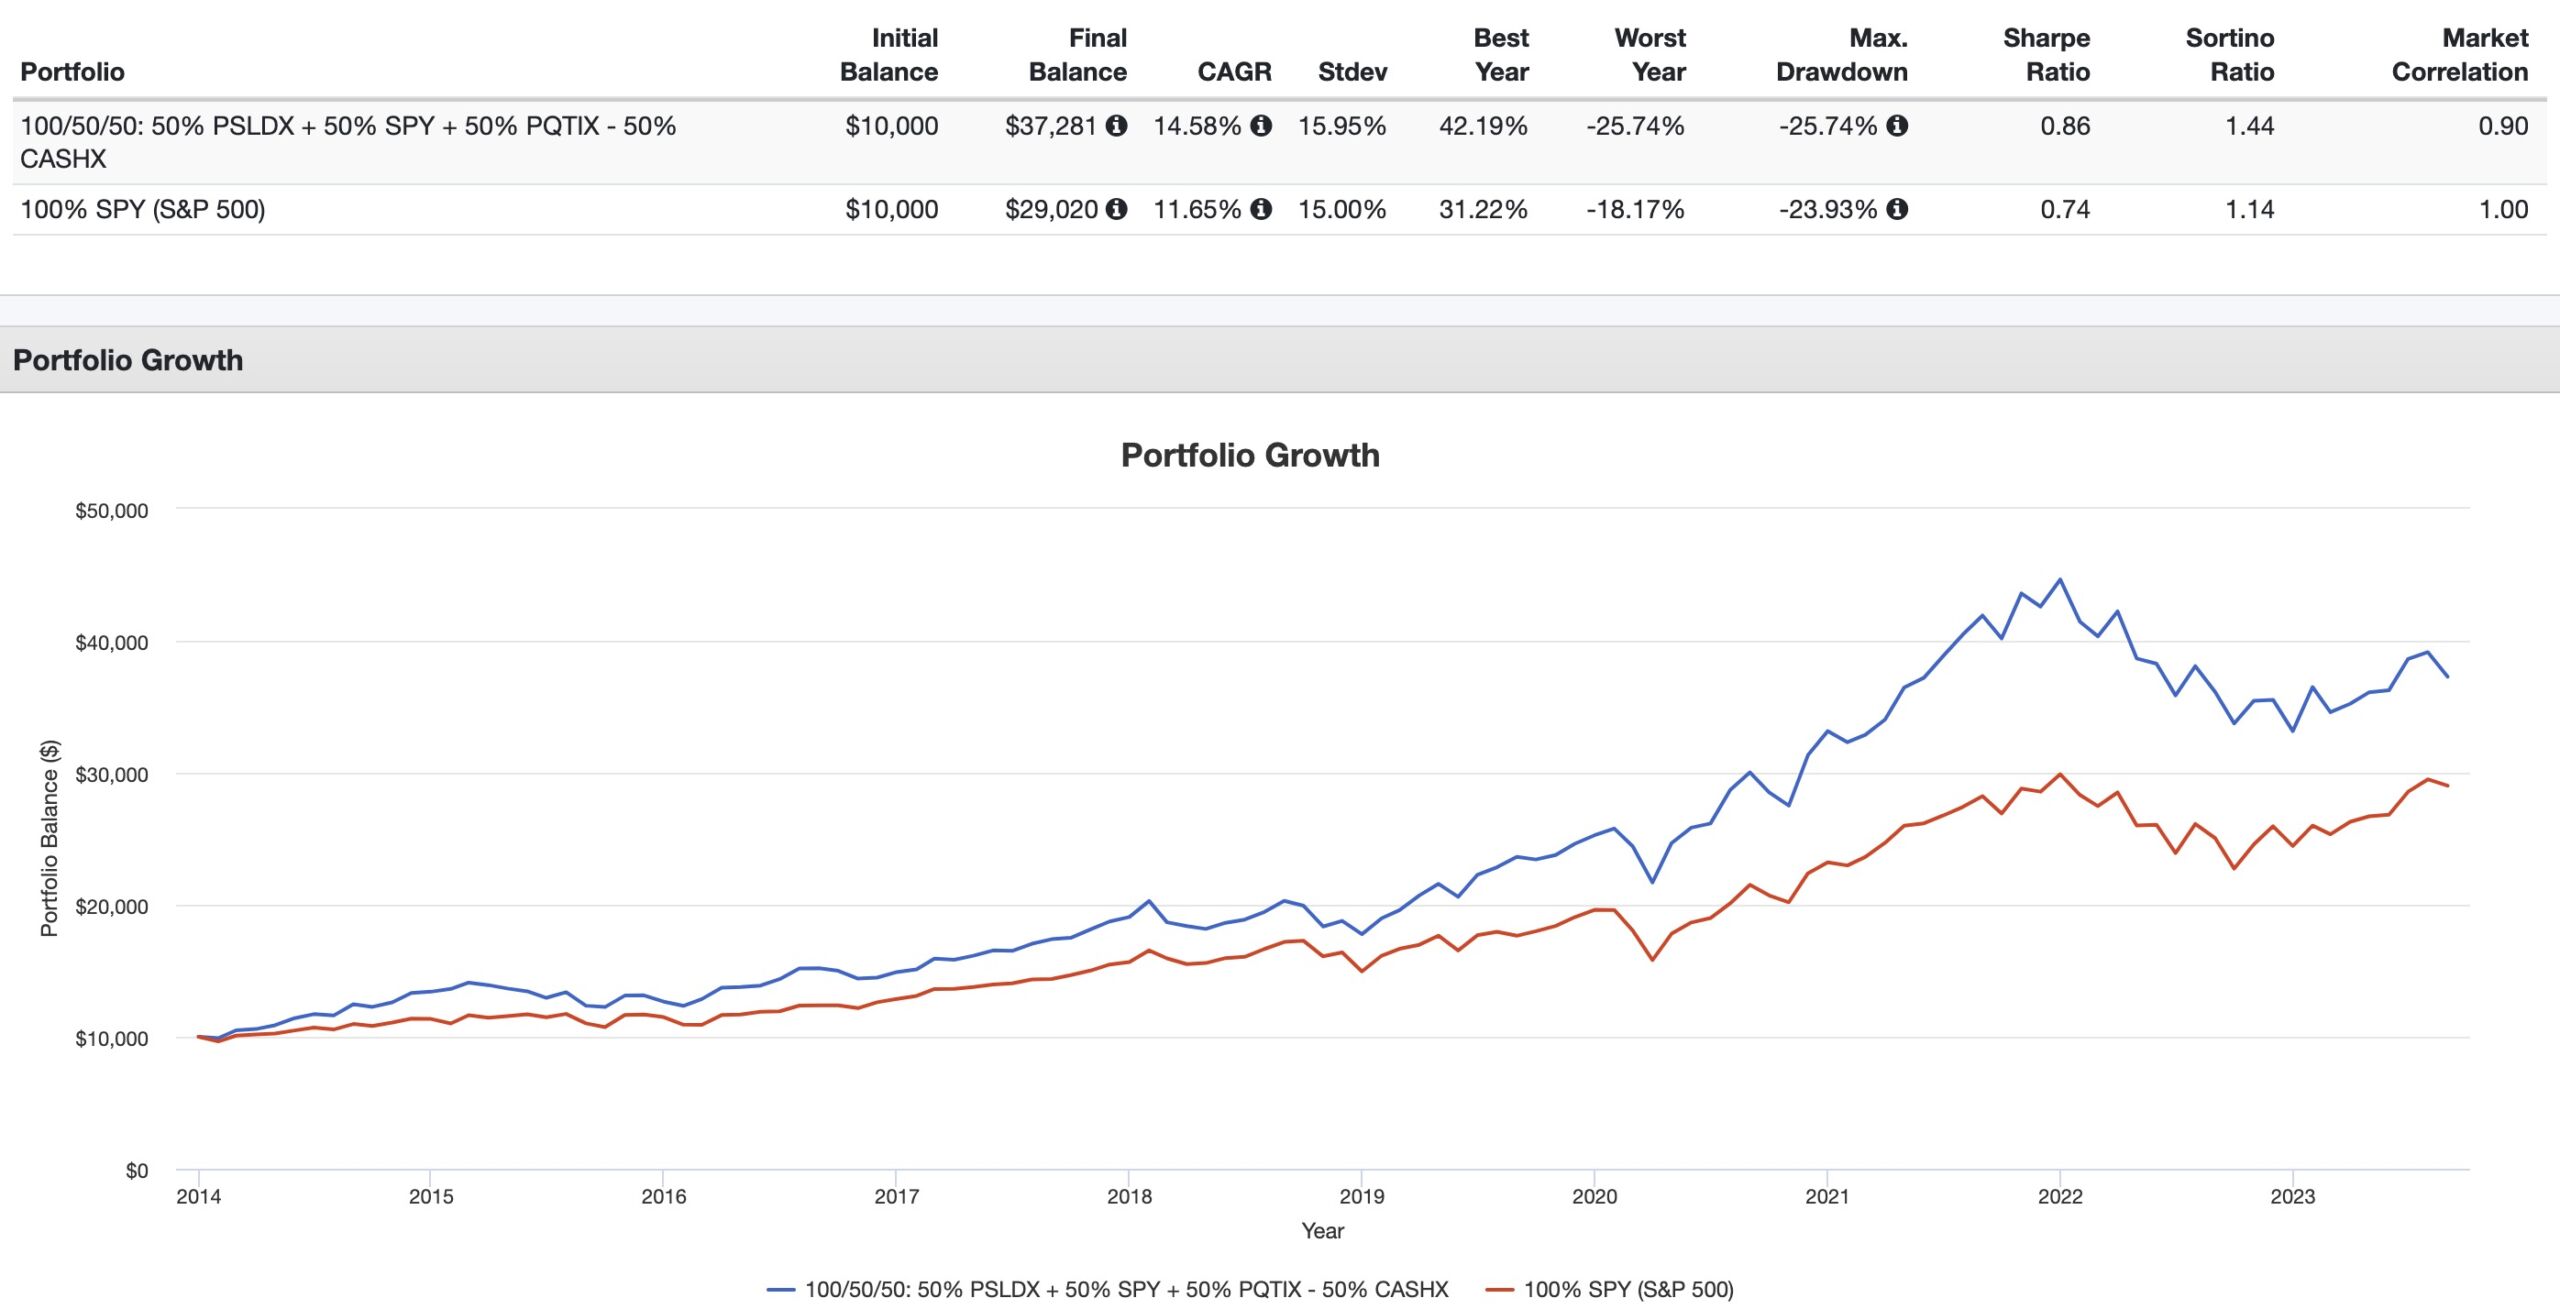 100% US Equities + 50% Bonds + 50% Managed Futures vs 100% S&P 500 SPY portfolio performance summary 